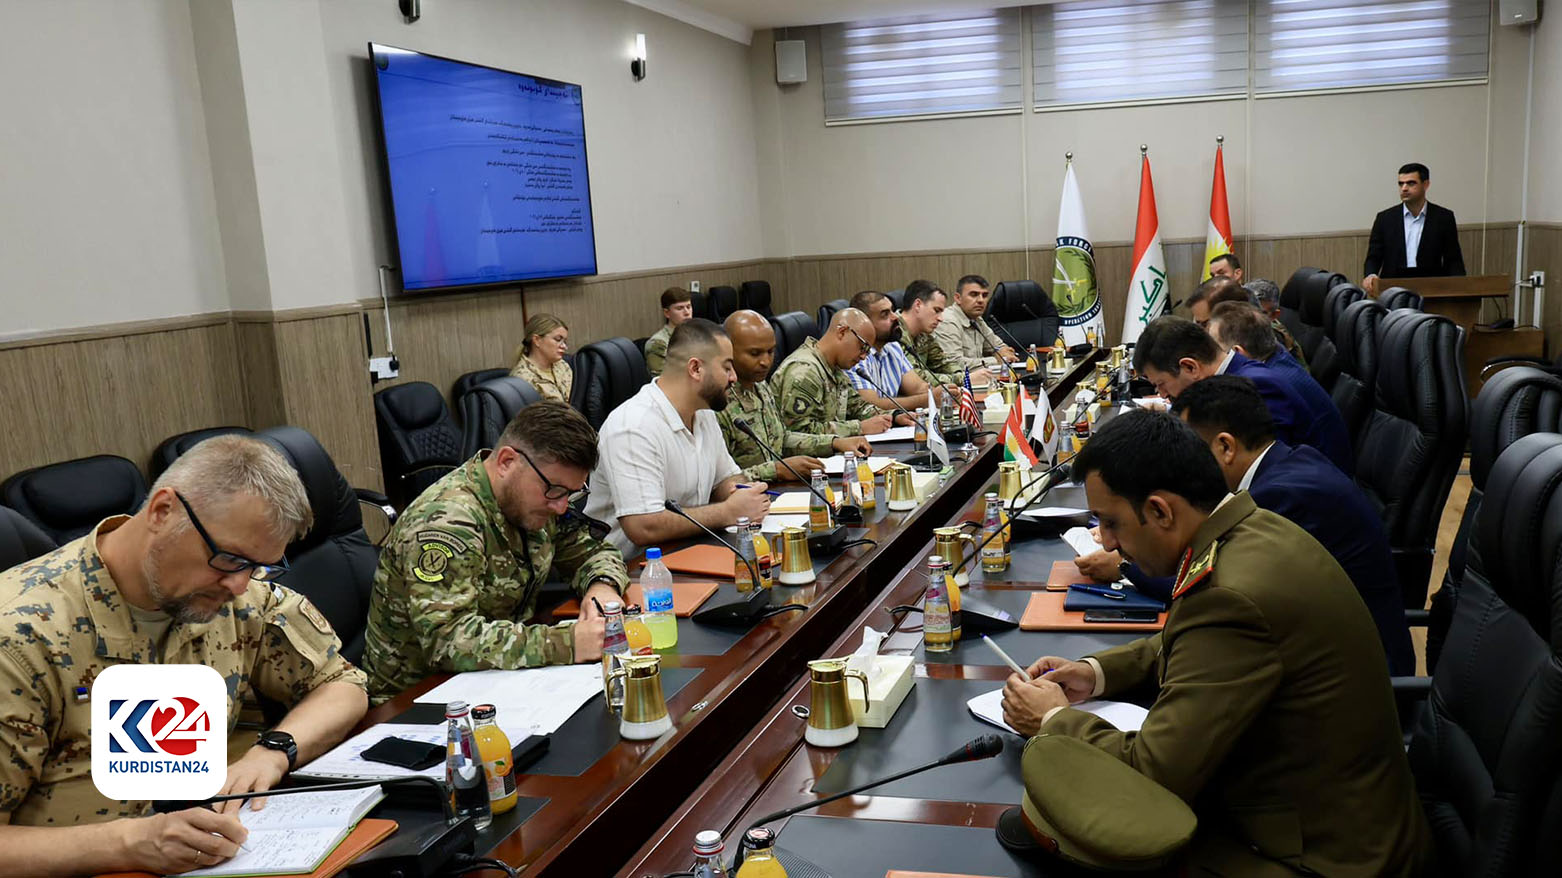 Peshmerga Ministry Coalition forces discuss Memorandum of Understanding